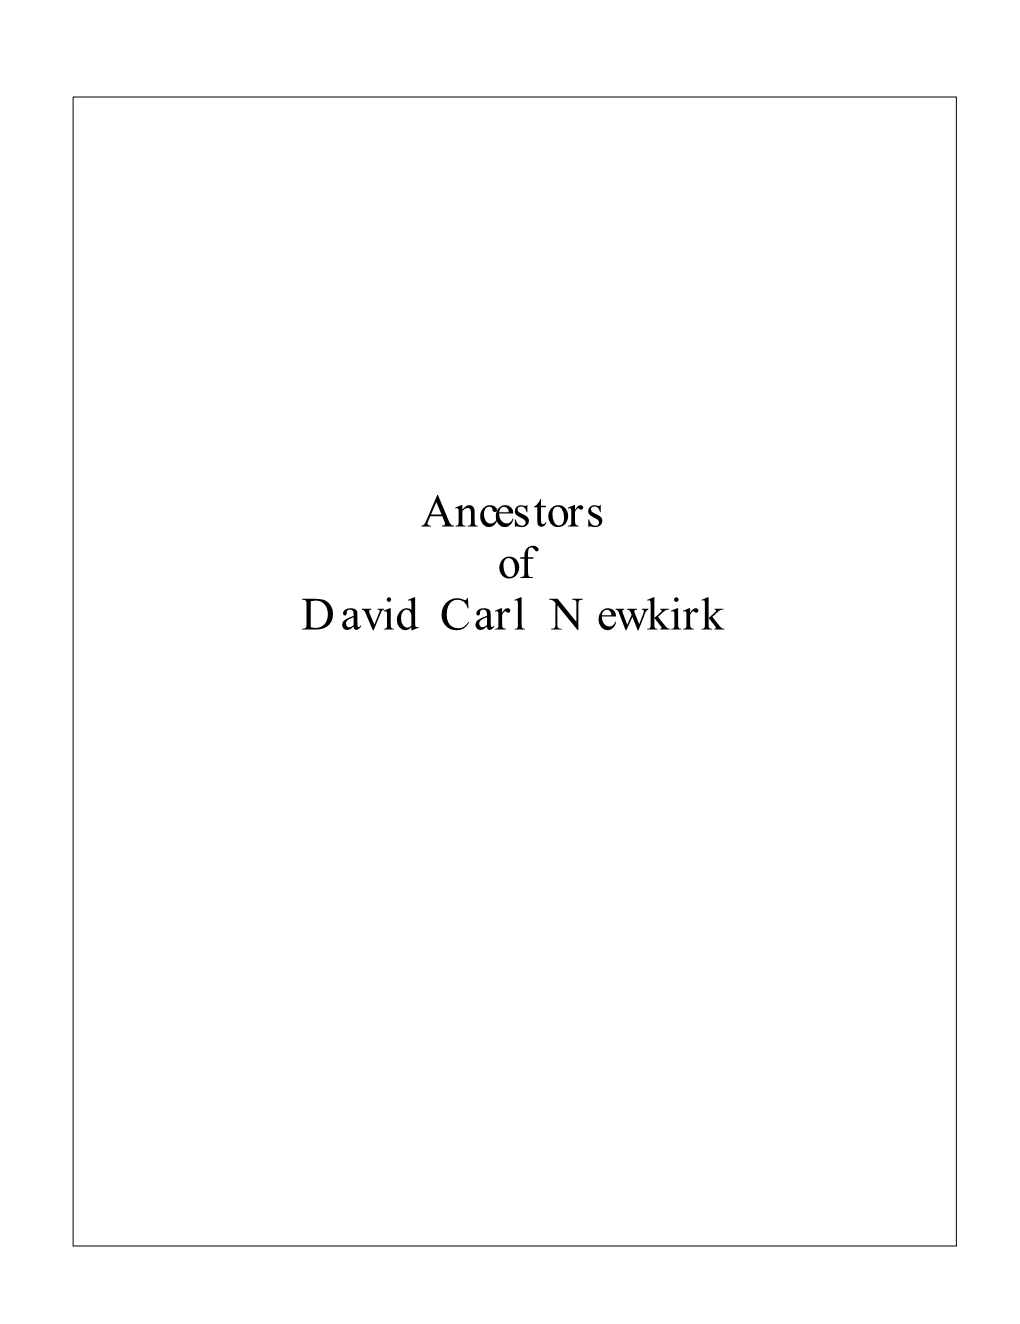 Ancestors of David Carl Newkirk